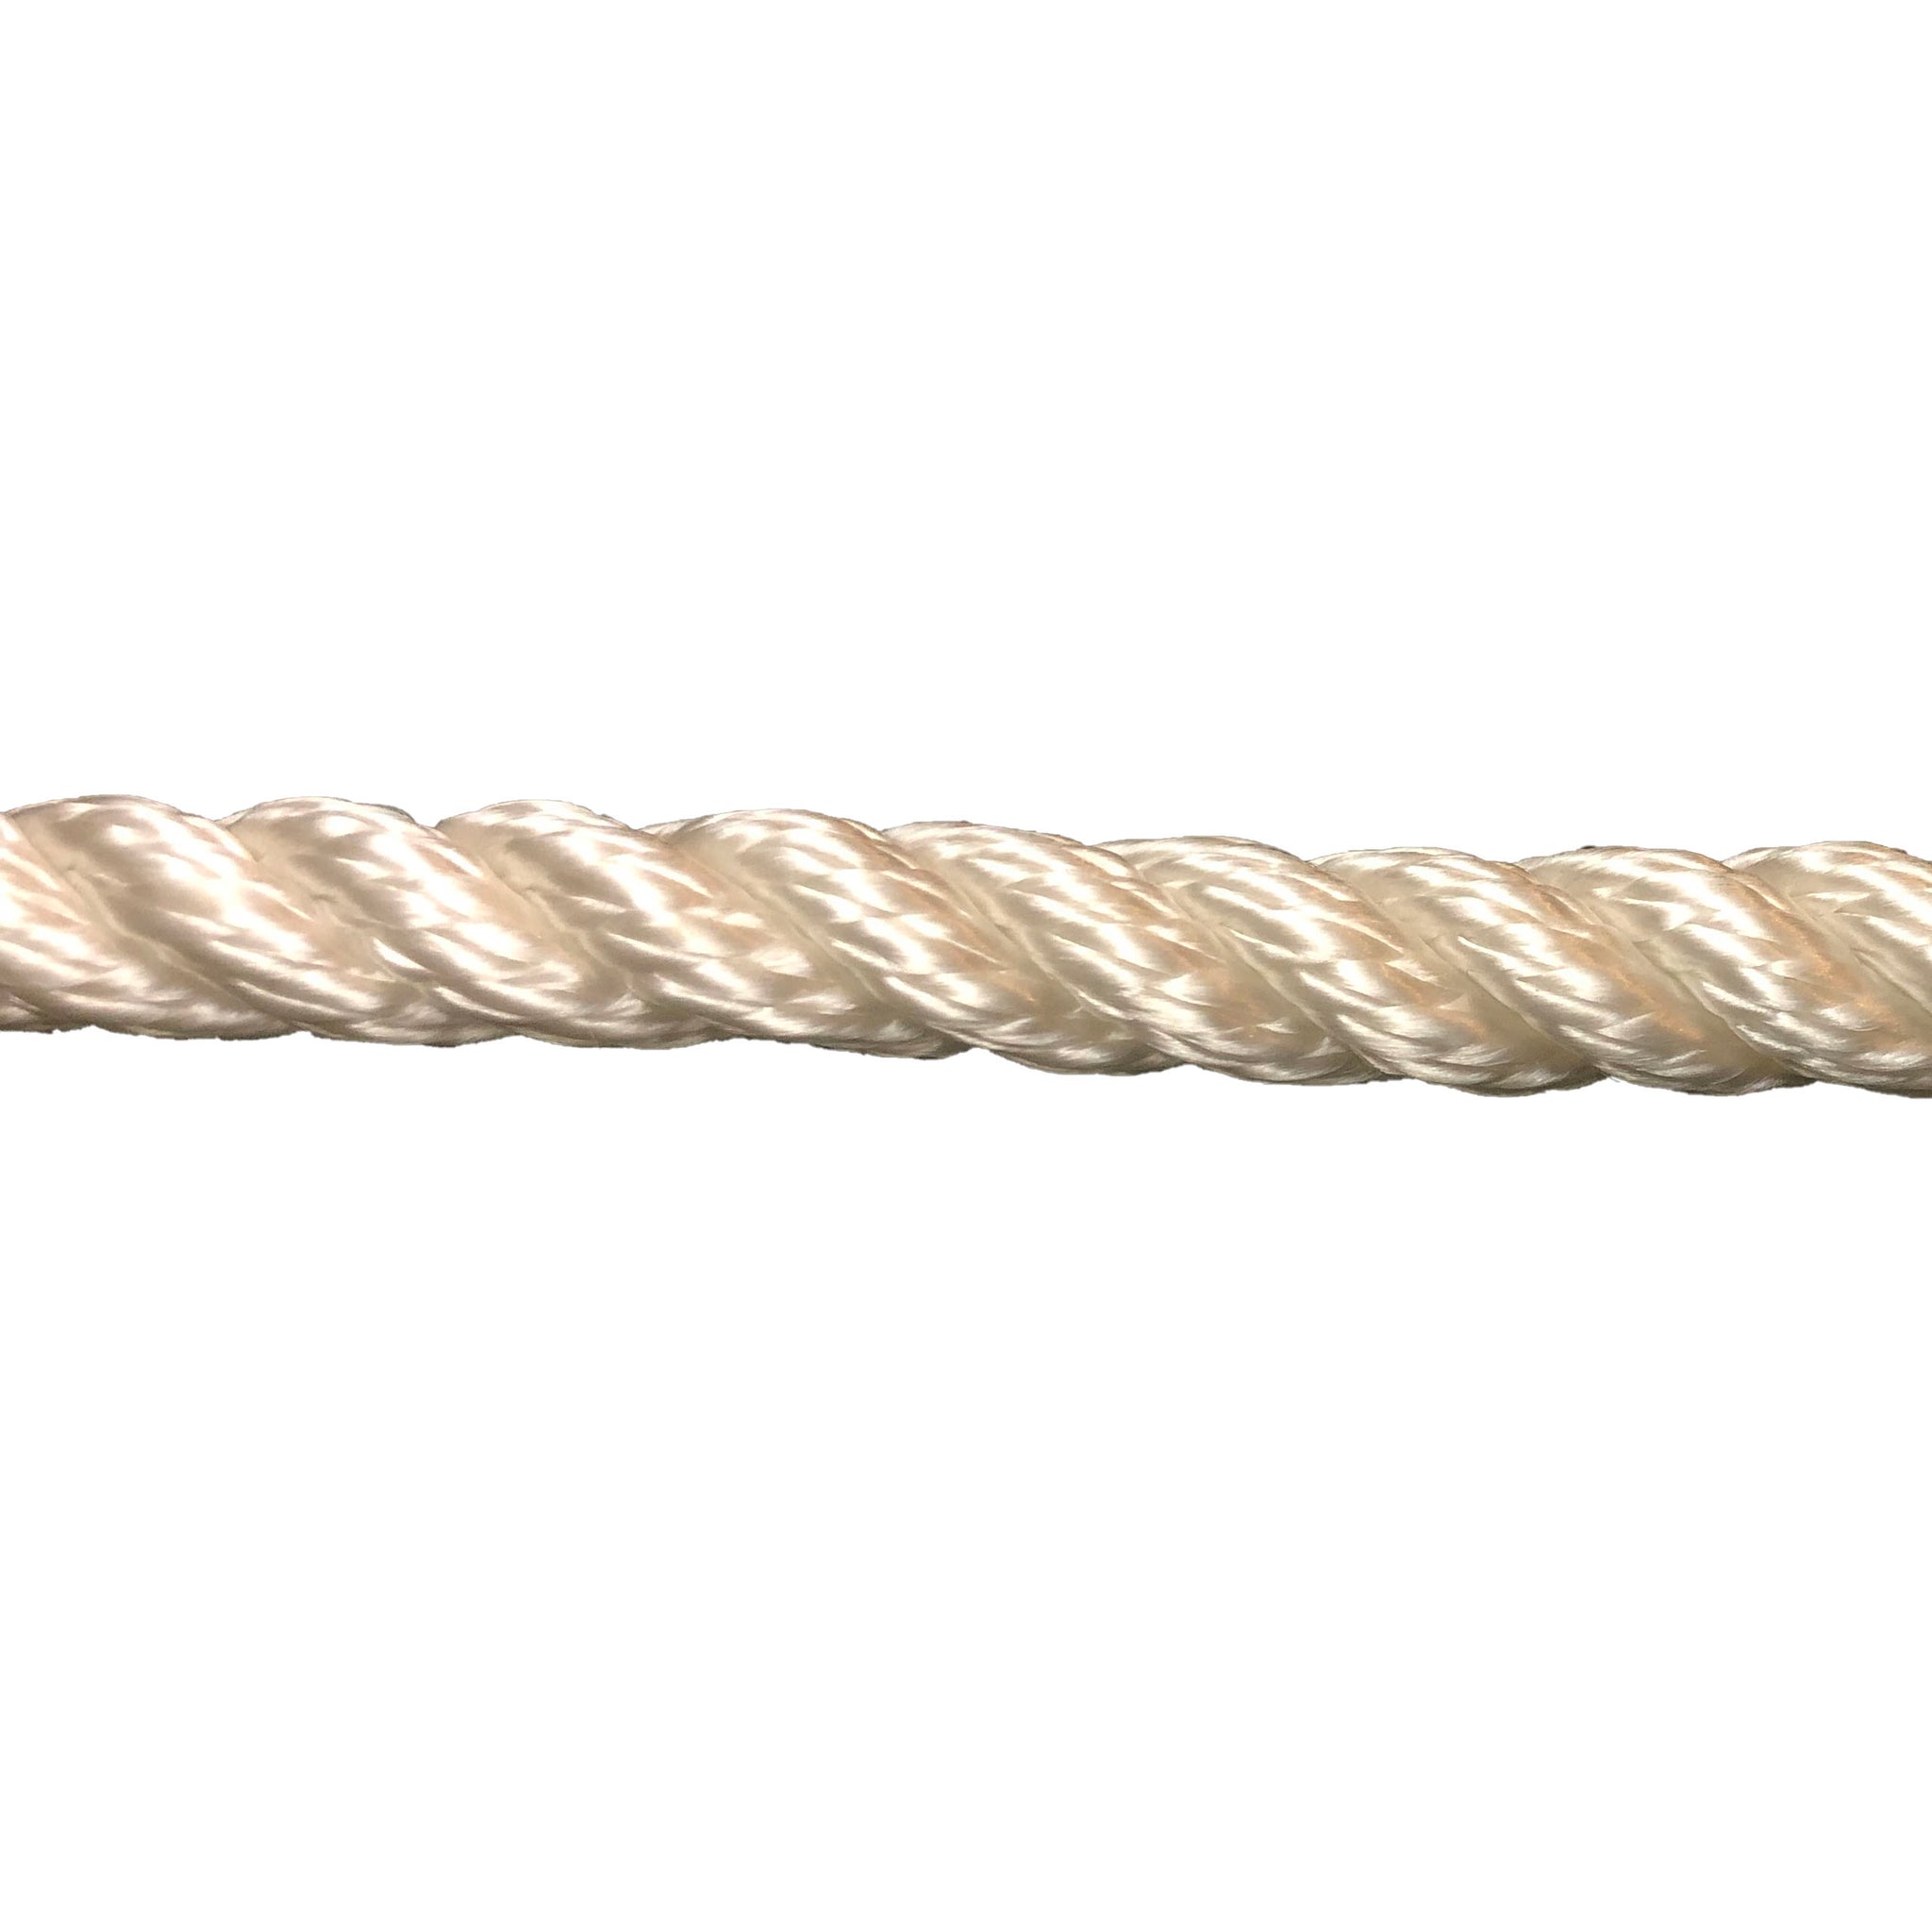 3 Strand Twisted Nylon Rope - 600ft